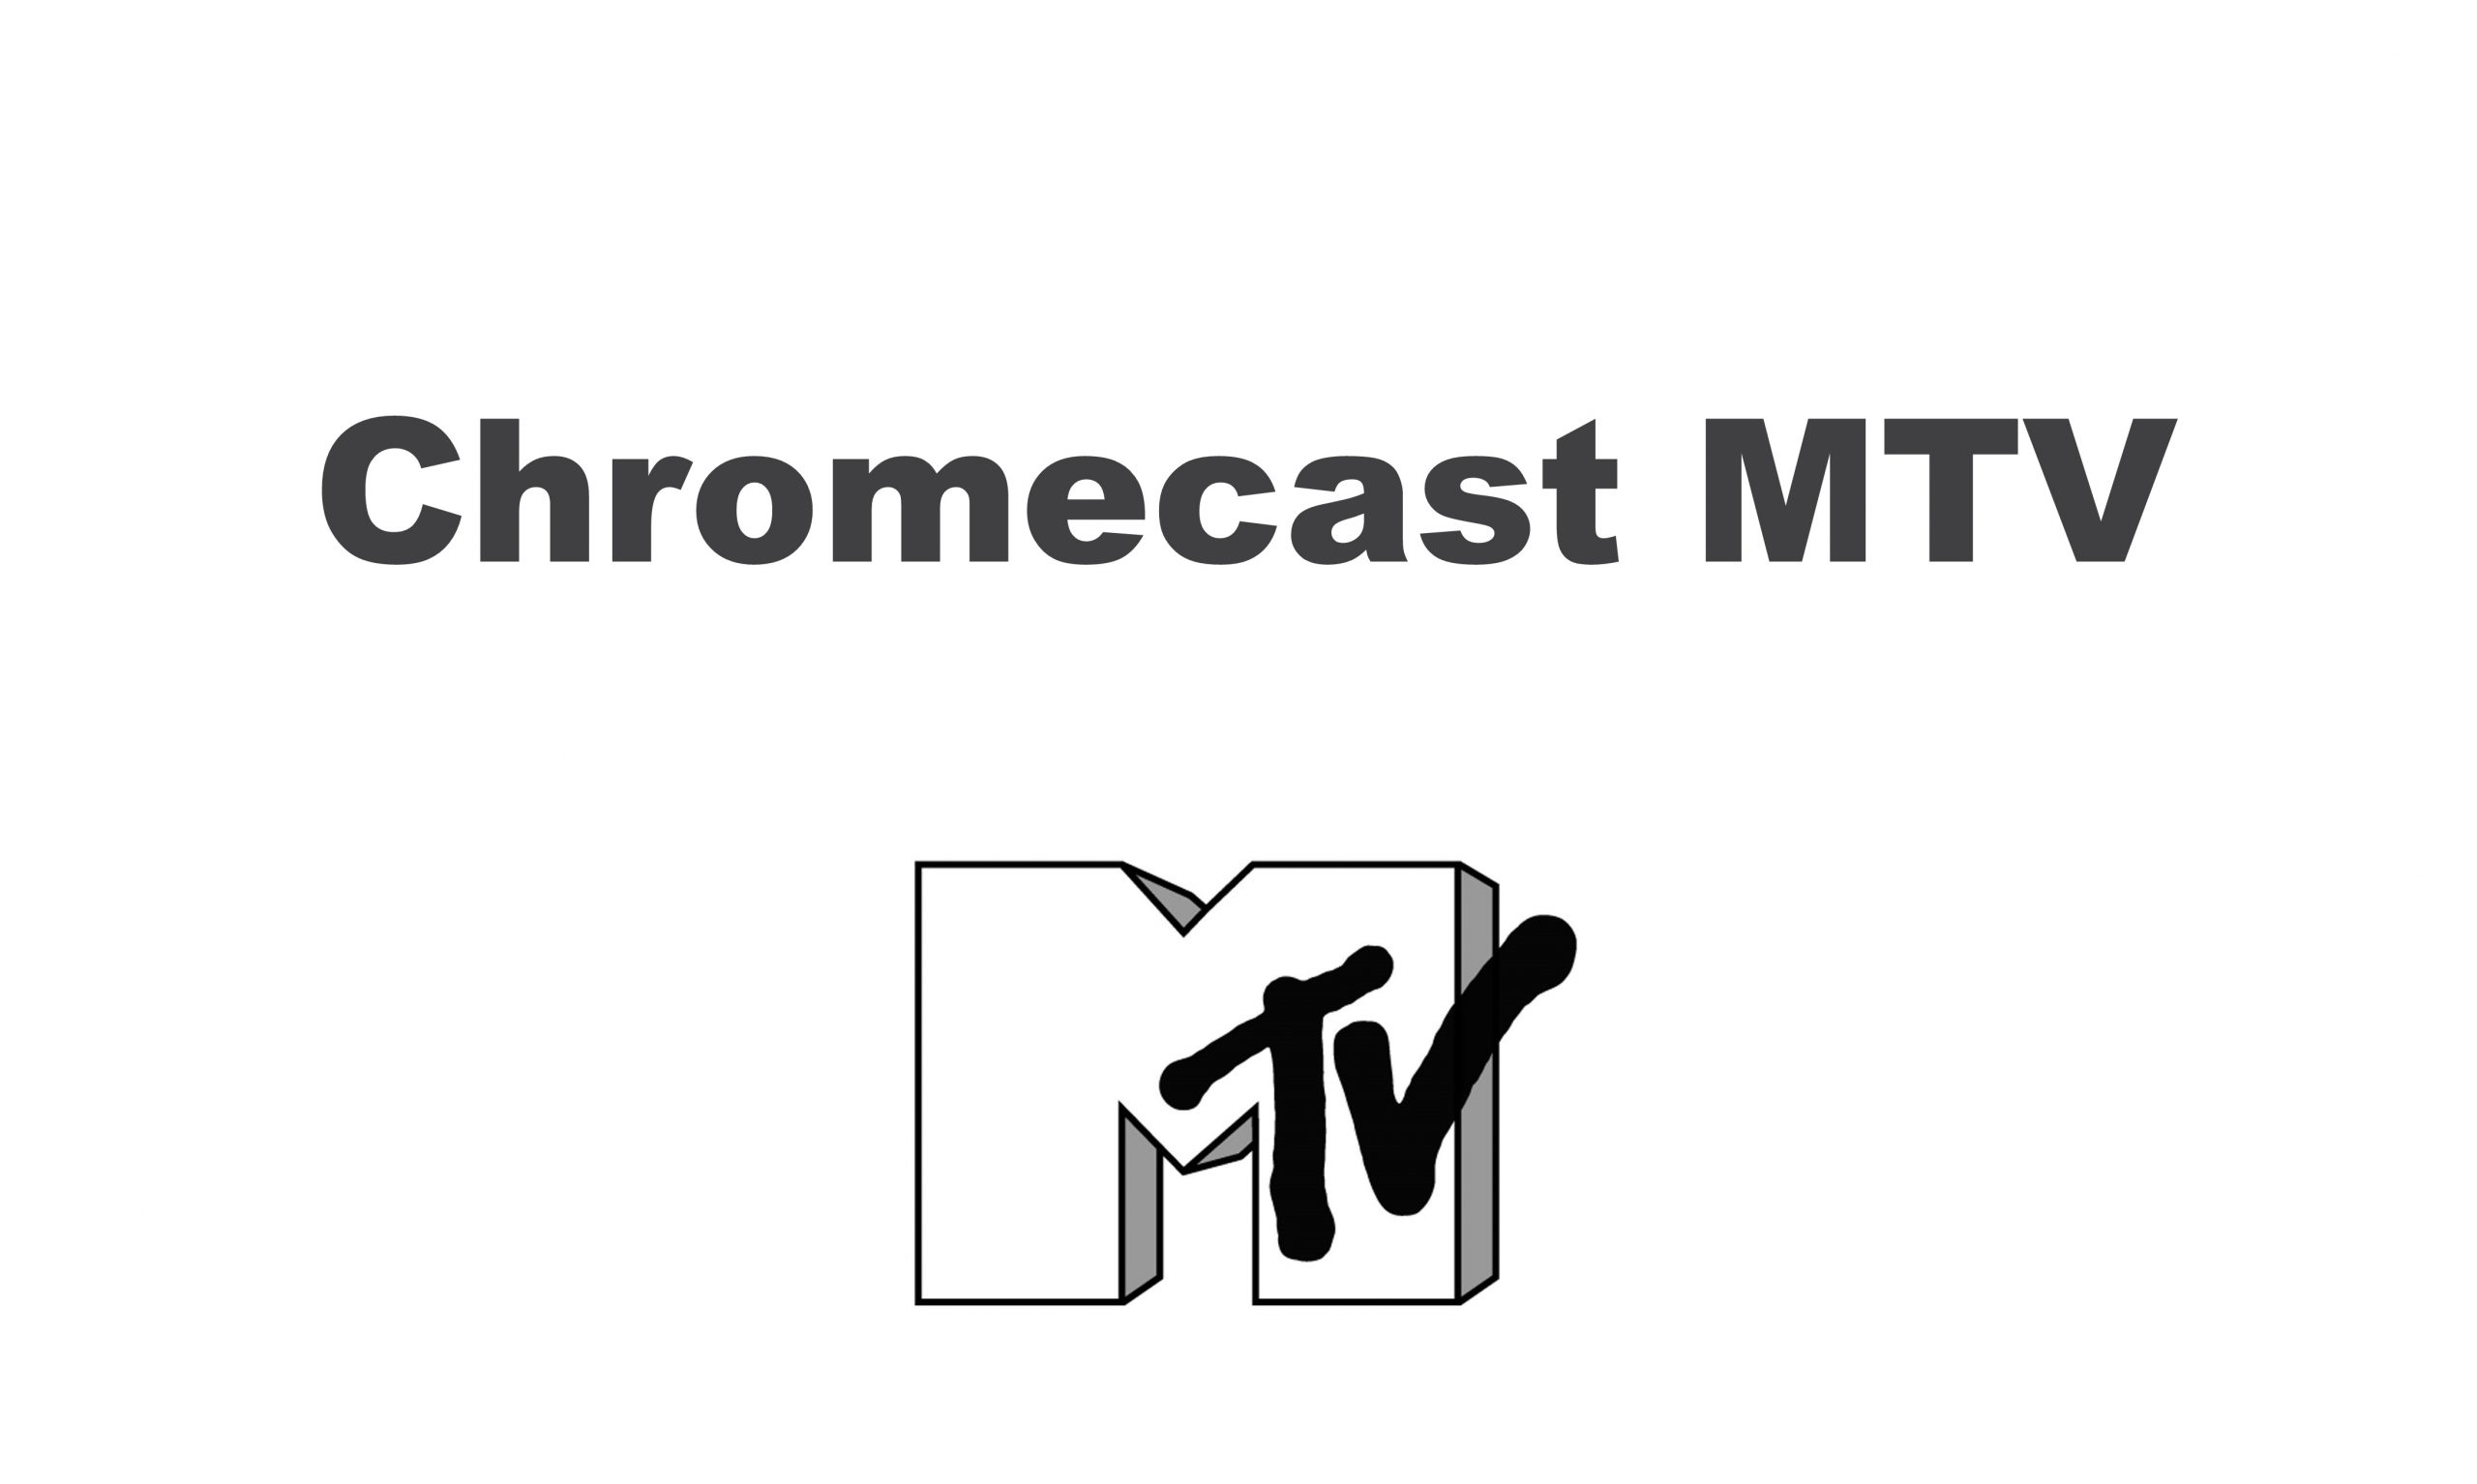 Chromecast MTV